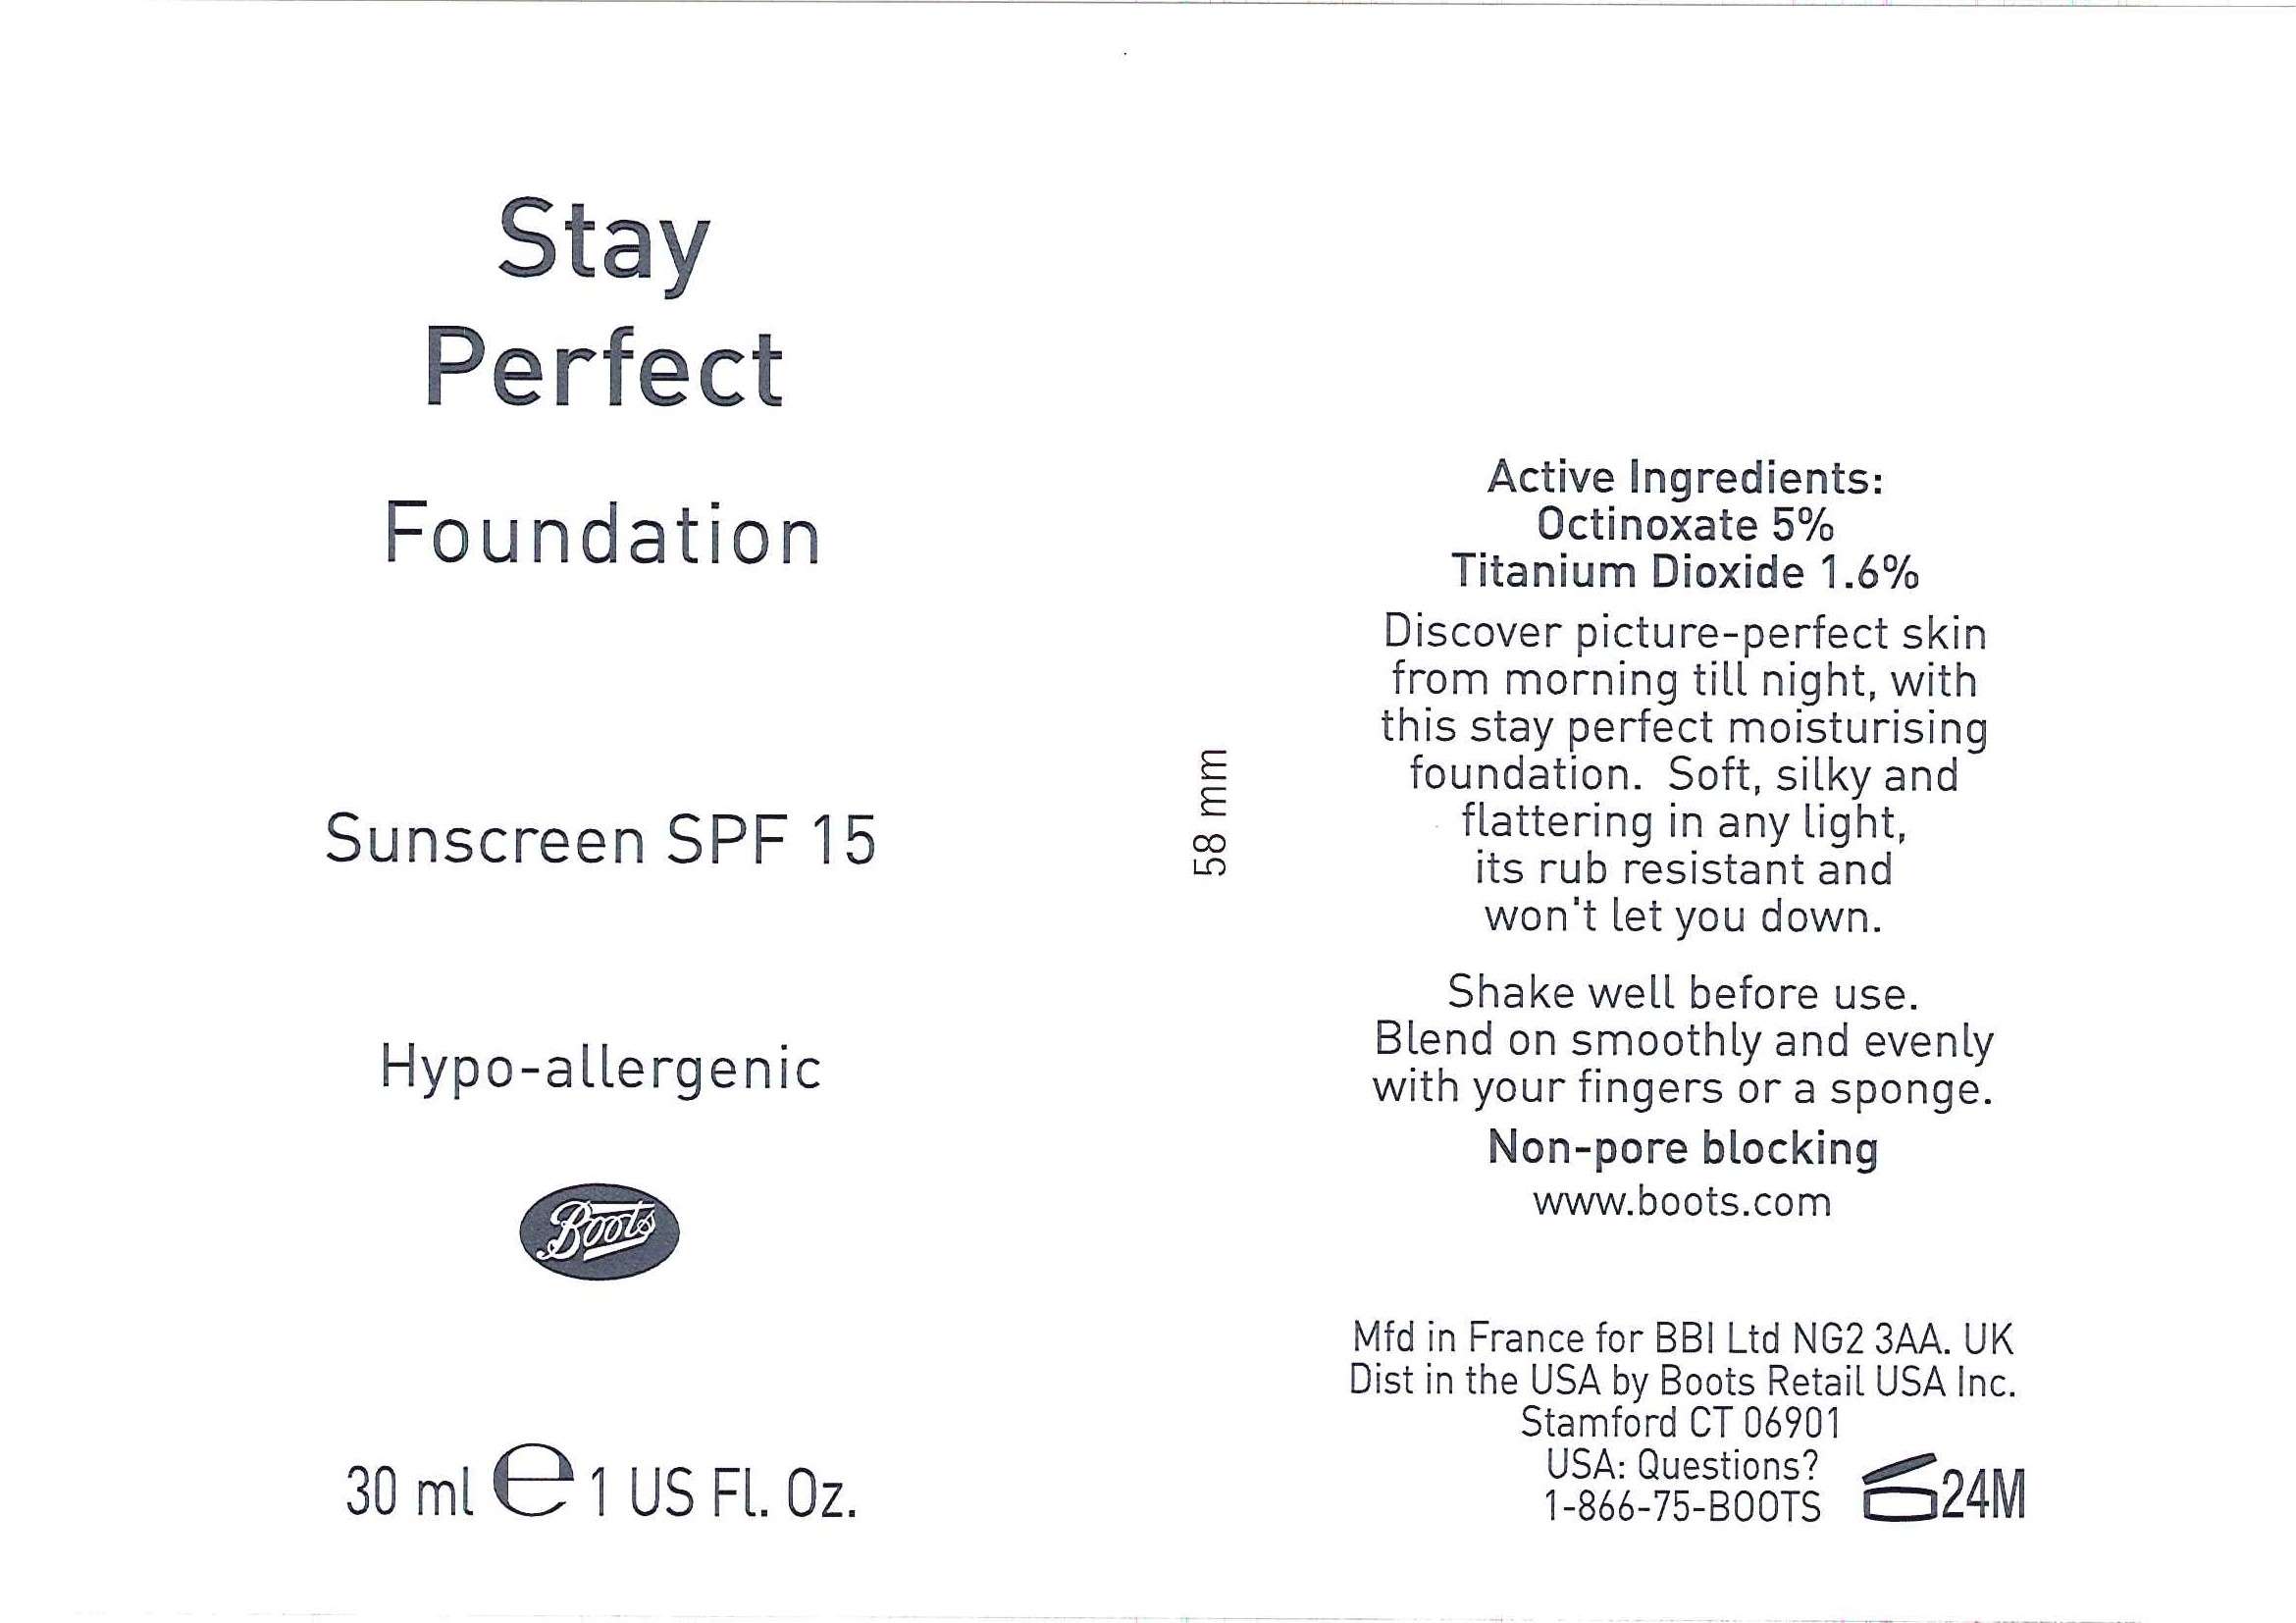 No7 Stay Perfect Foundation Sunscreen SPF 15  Buff